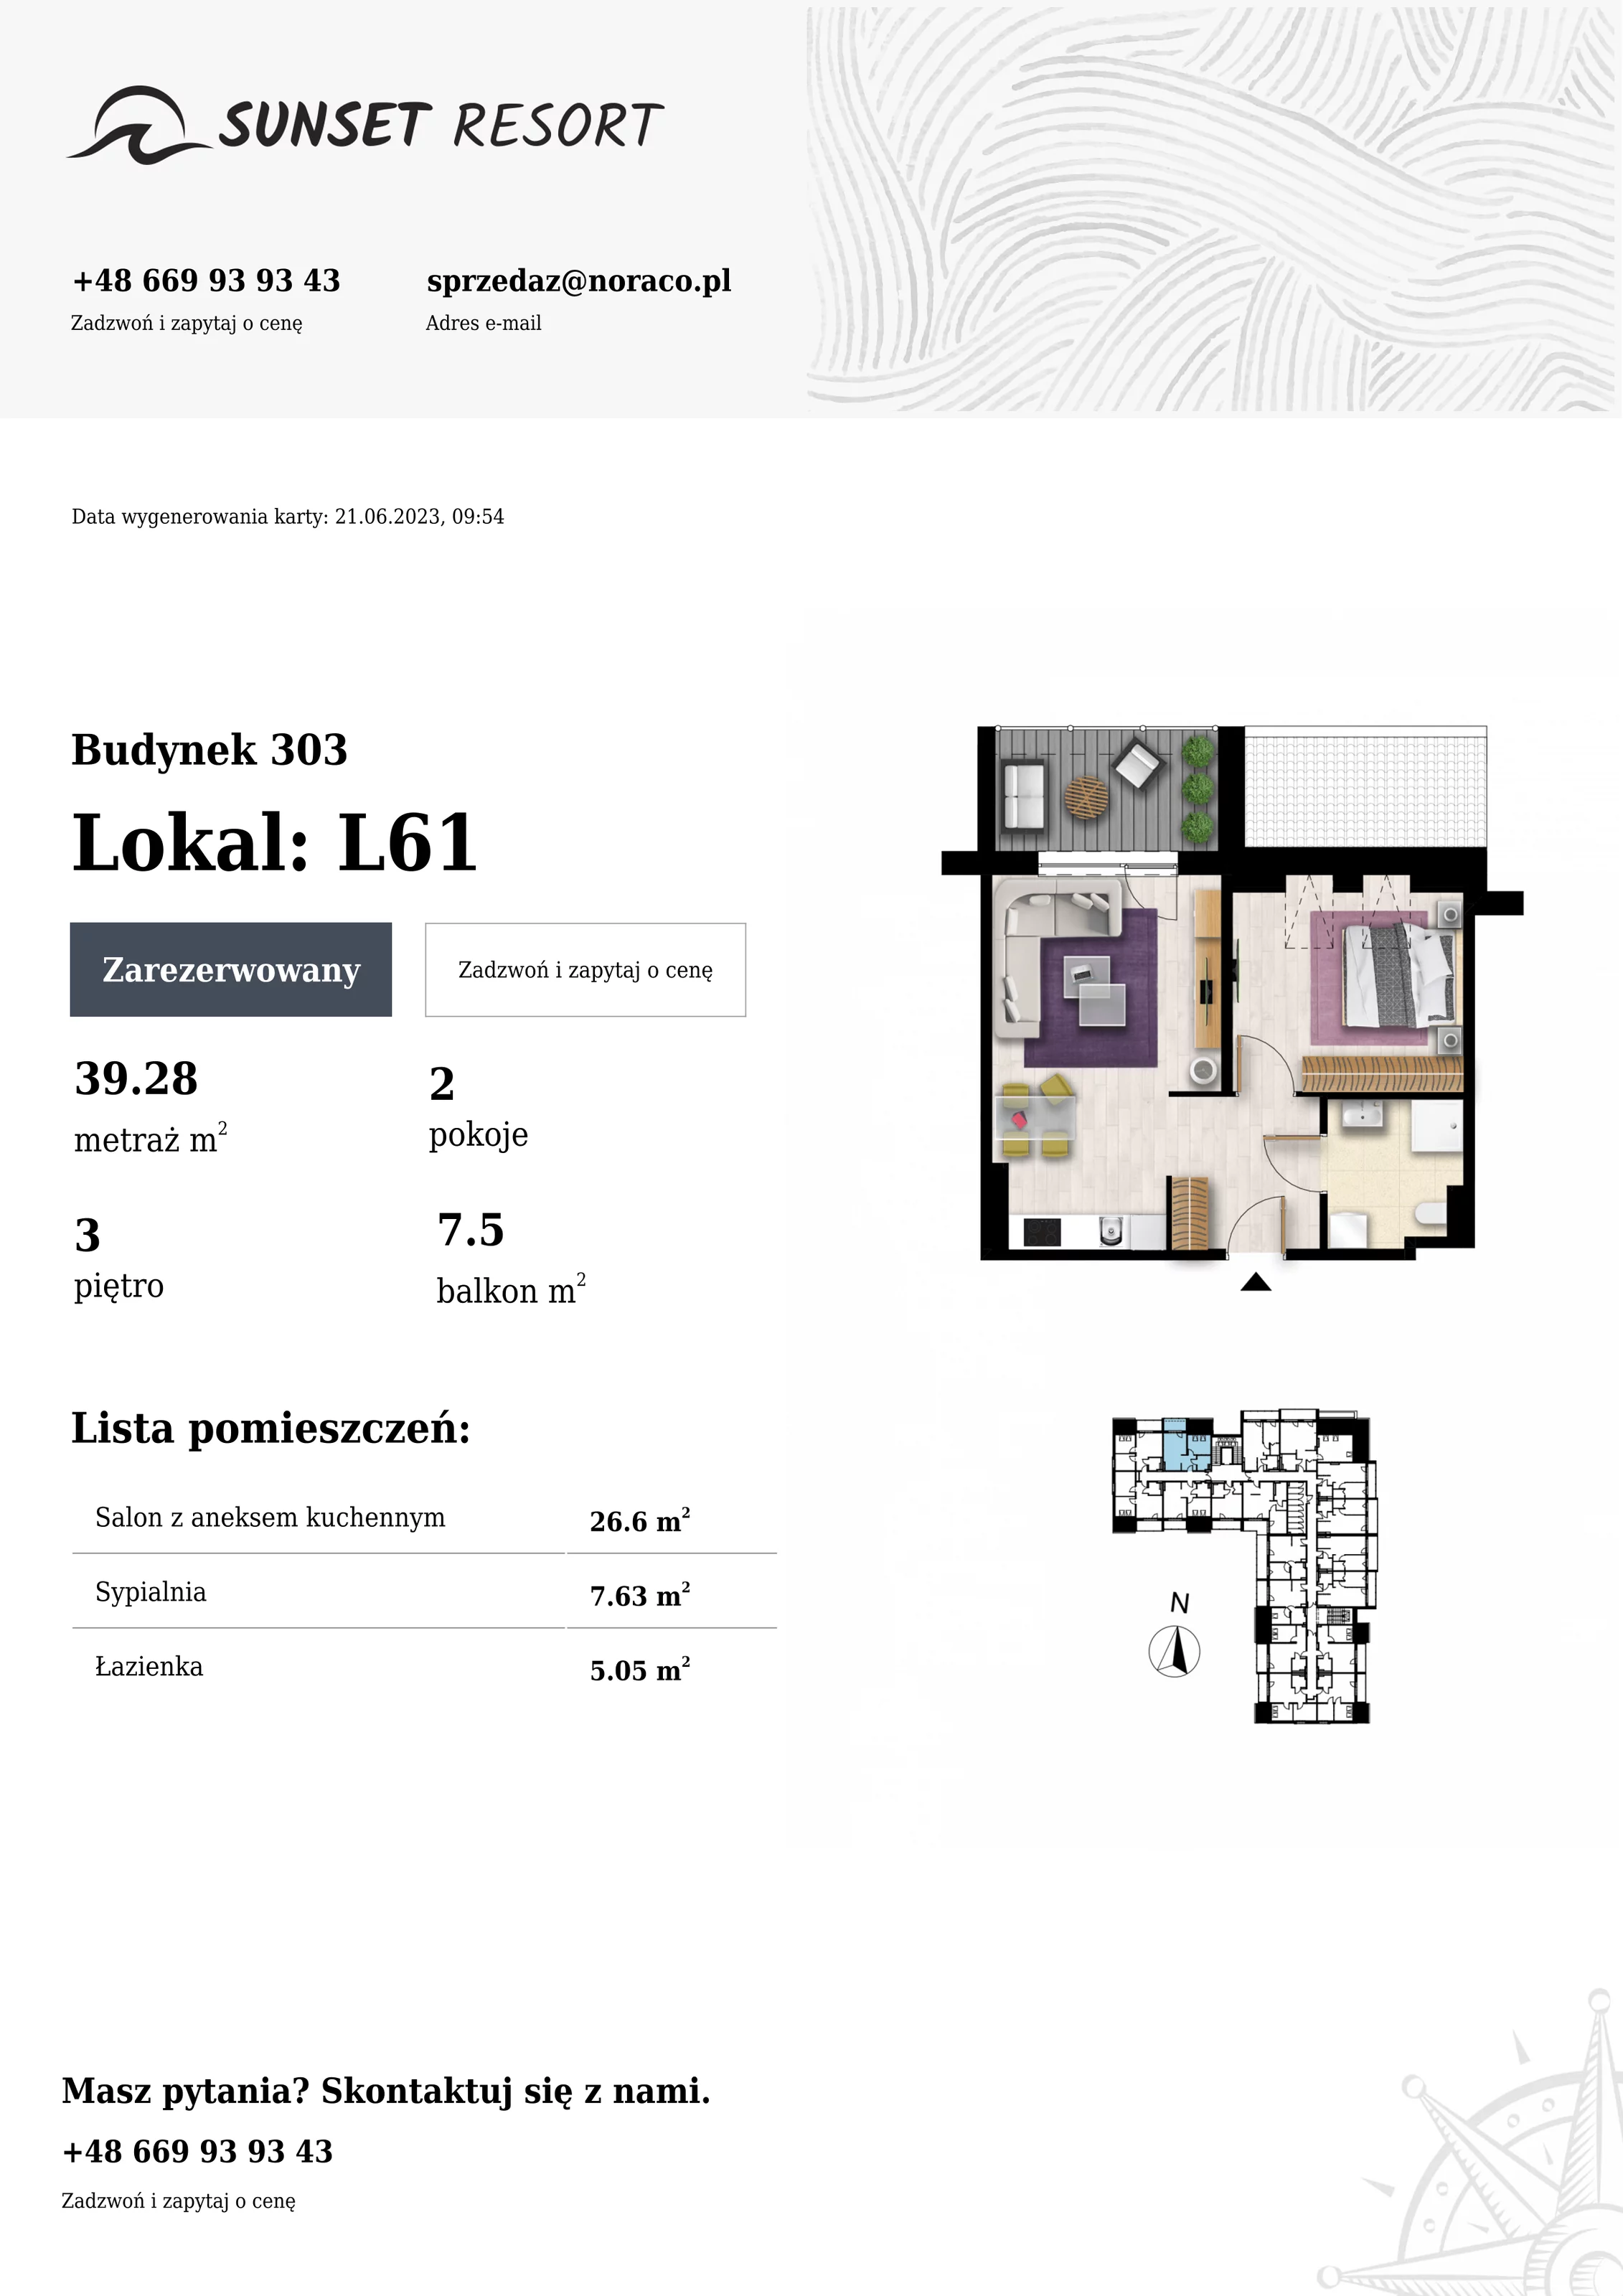 Apartament 39,28 m², piętro 3, oferta nr L61, Sunset Resort, Grzybowo, ul. Nadmorska 106